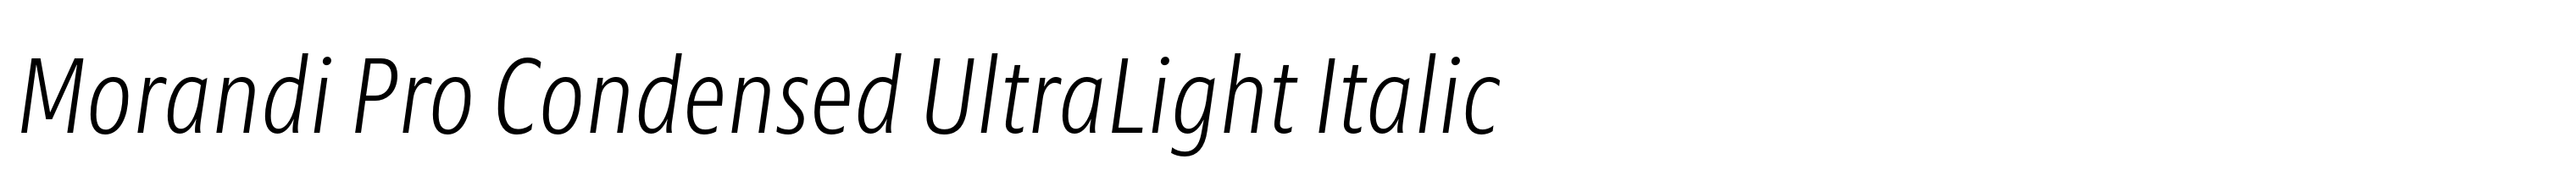 Morandi Pro Condensed UltraLight Italic